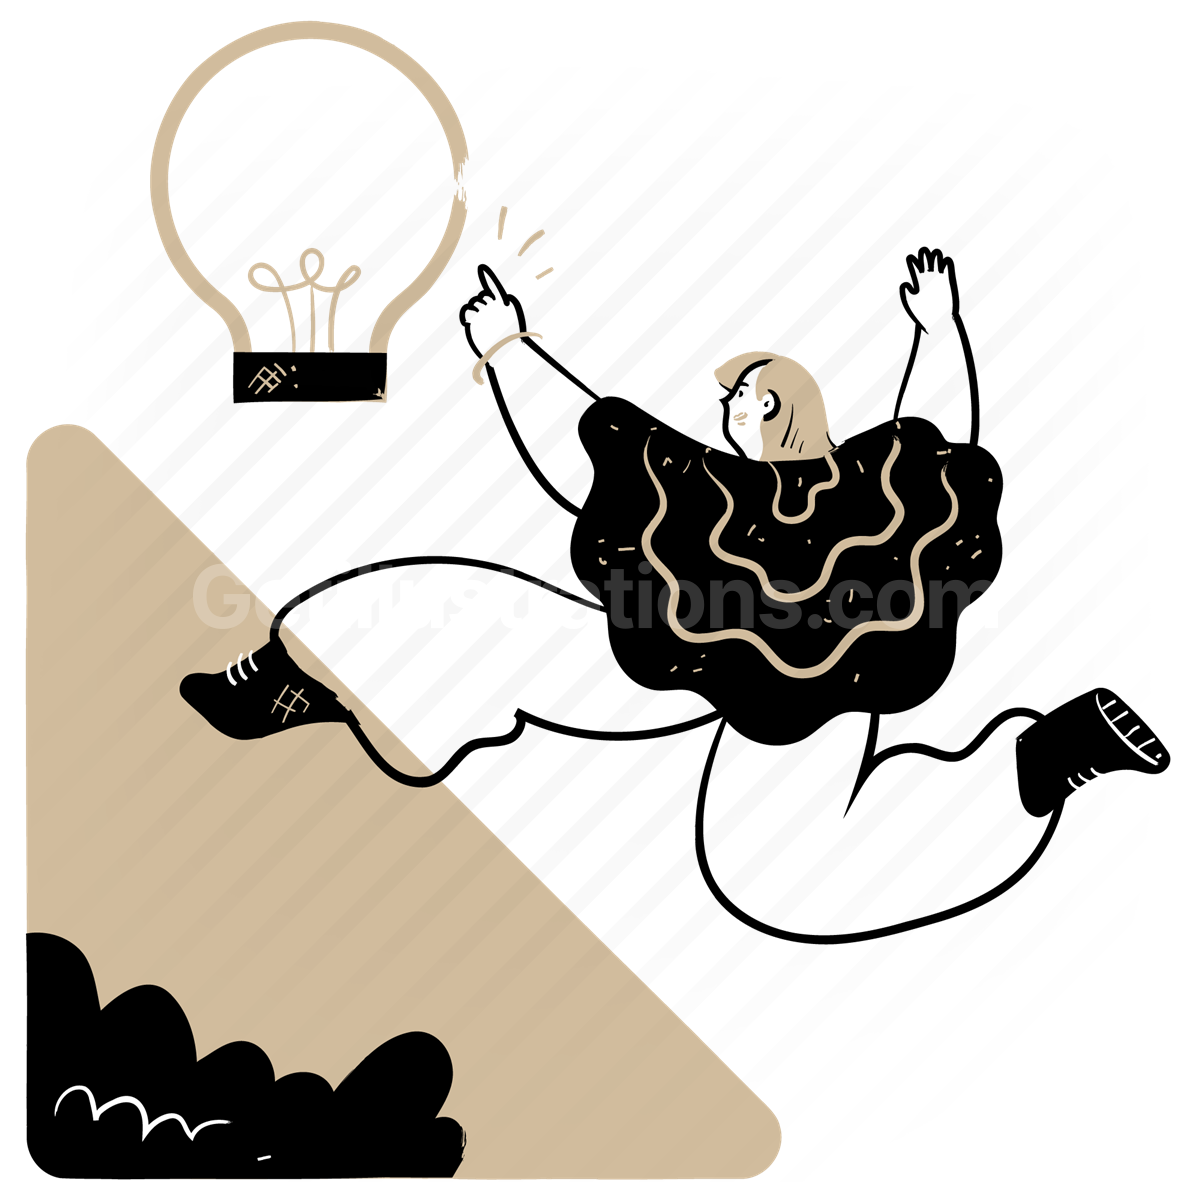 Tech and Innovation illustration